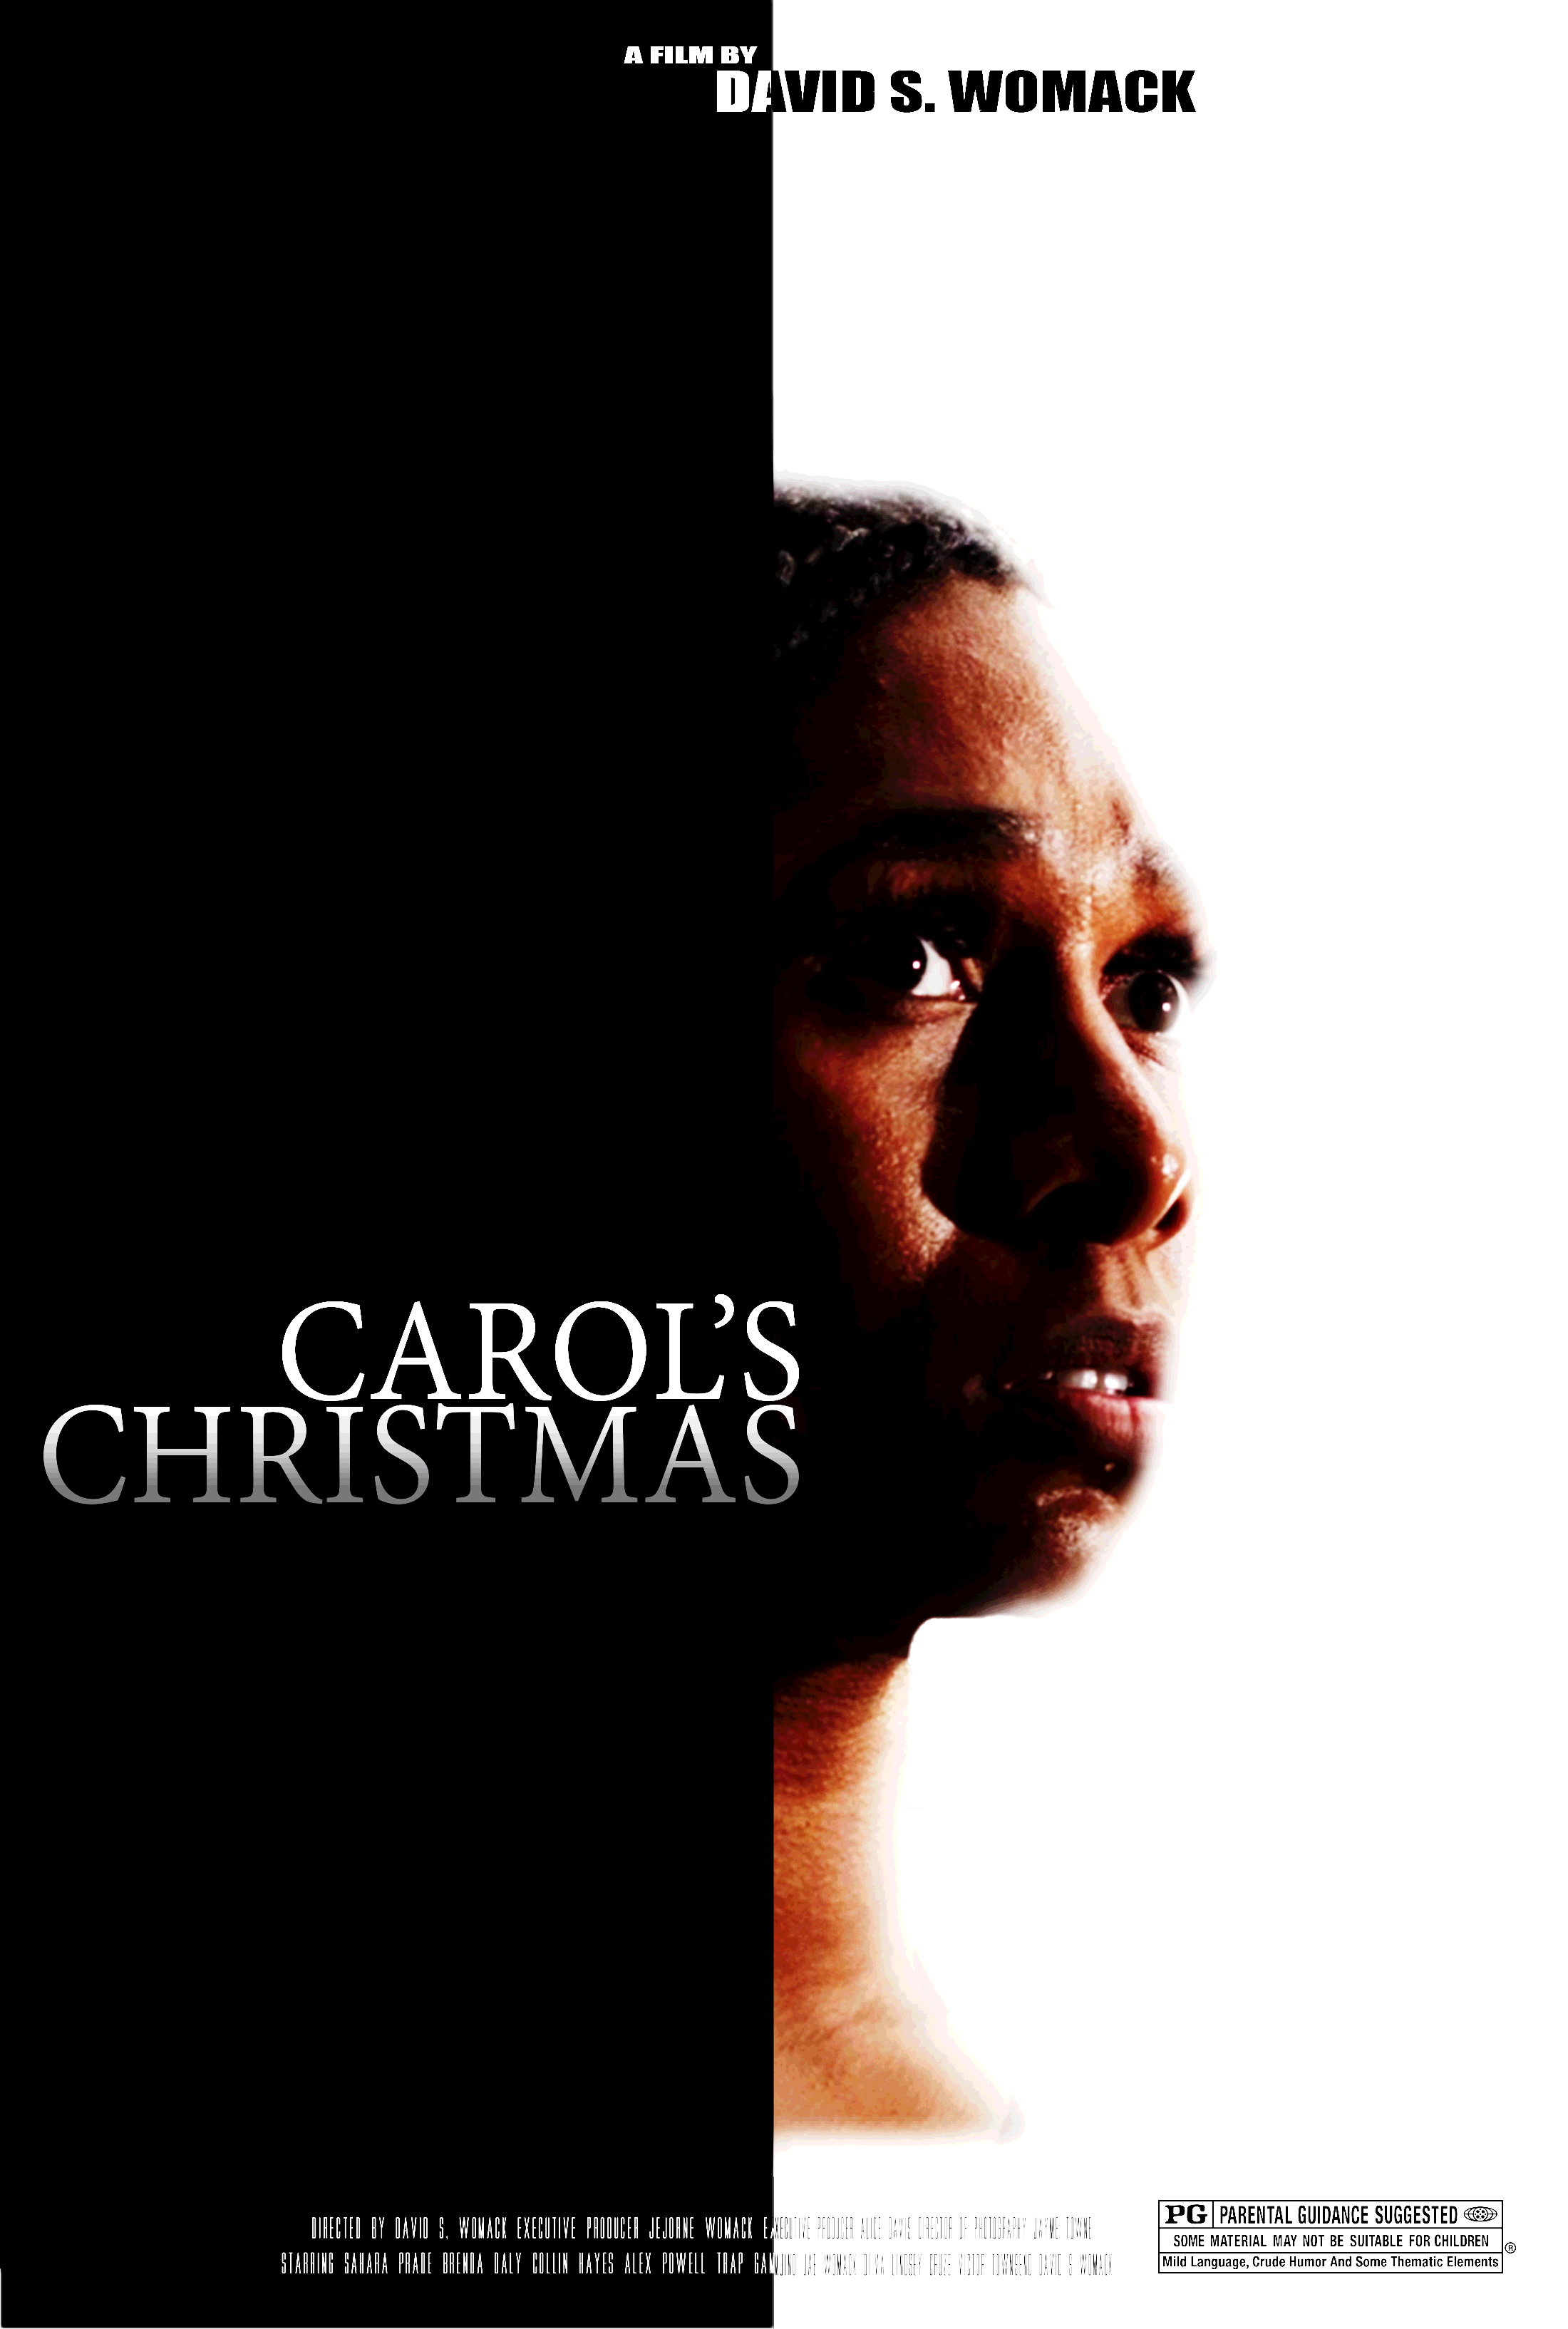 Nonton film Carols Christmas layarkaca21 indoxx1 ganool online streaming terbaru